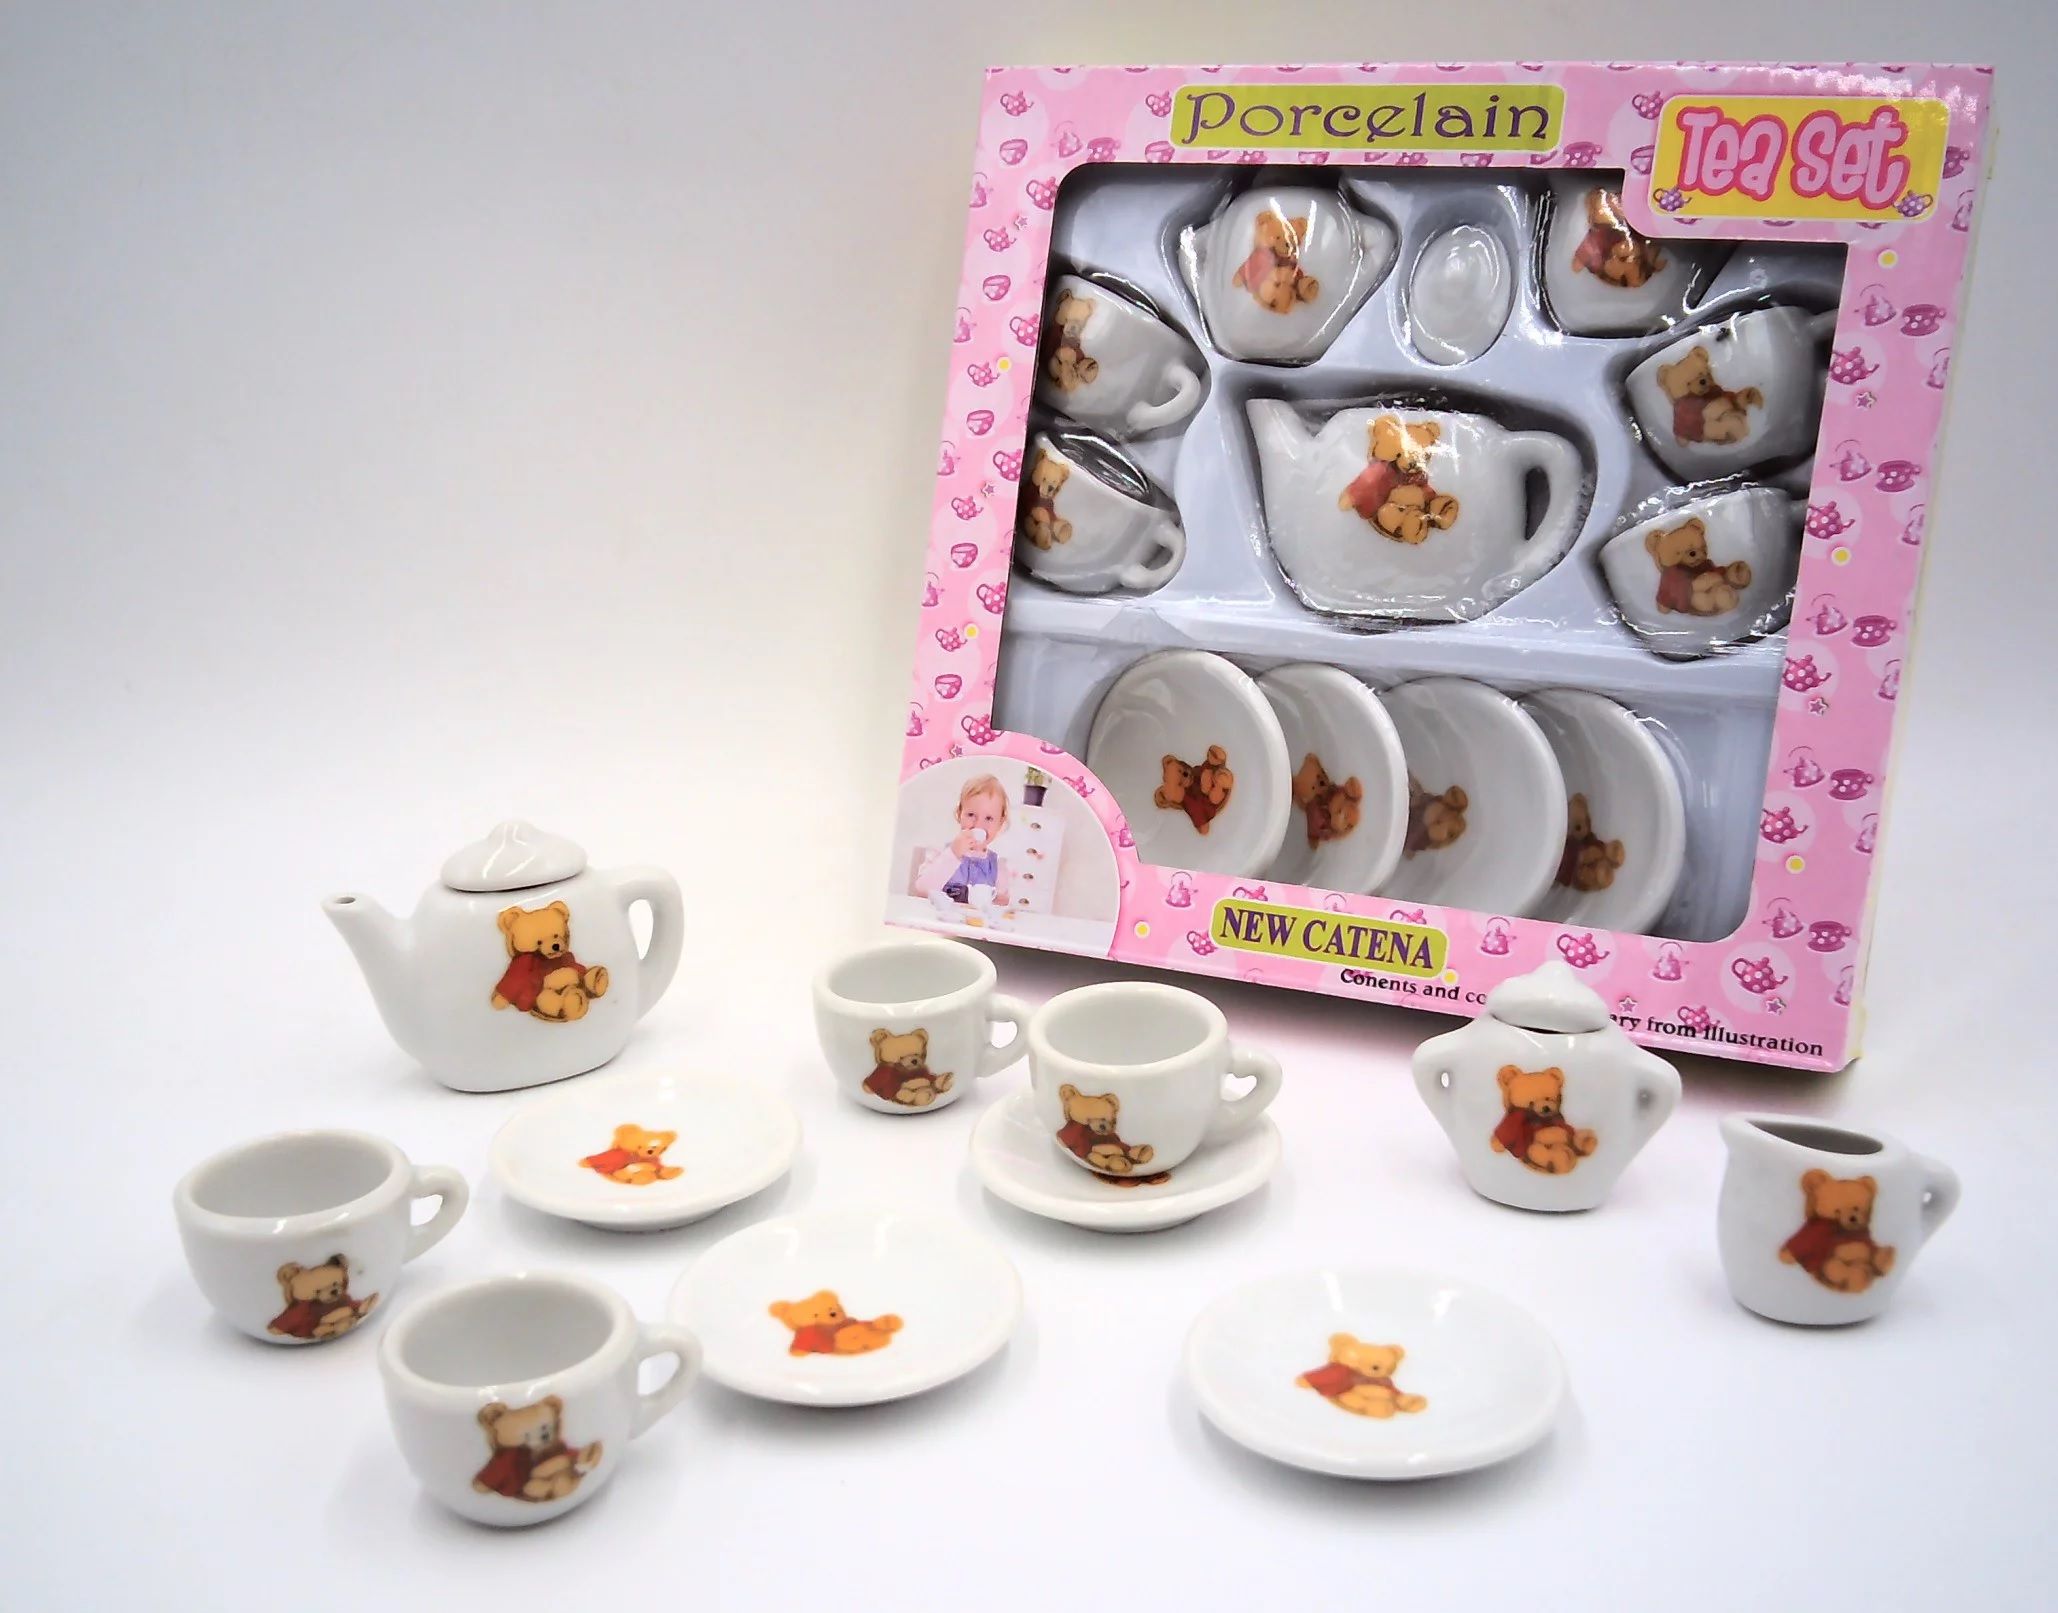 GIRL FUN TOYS 13 Piece Real Porcelain Ceramic Tea Set Toy For Little Girls - 